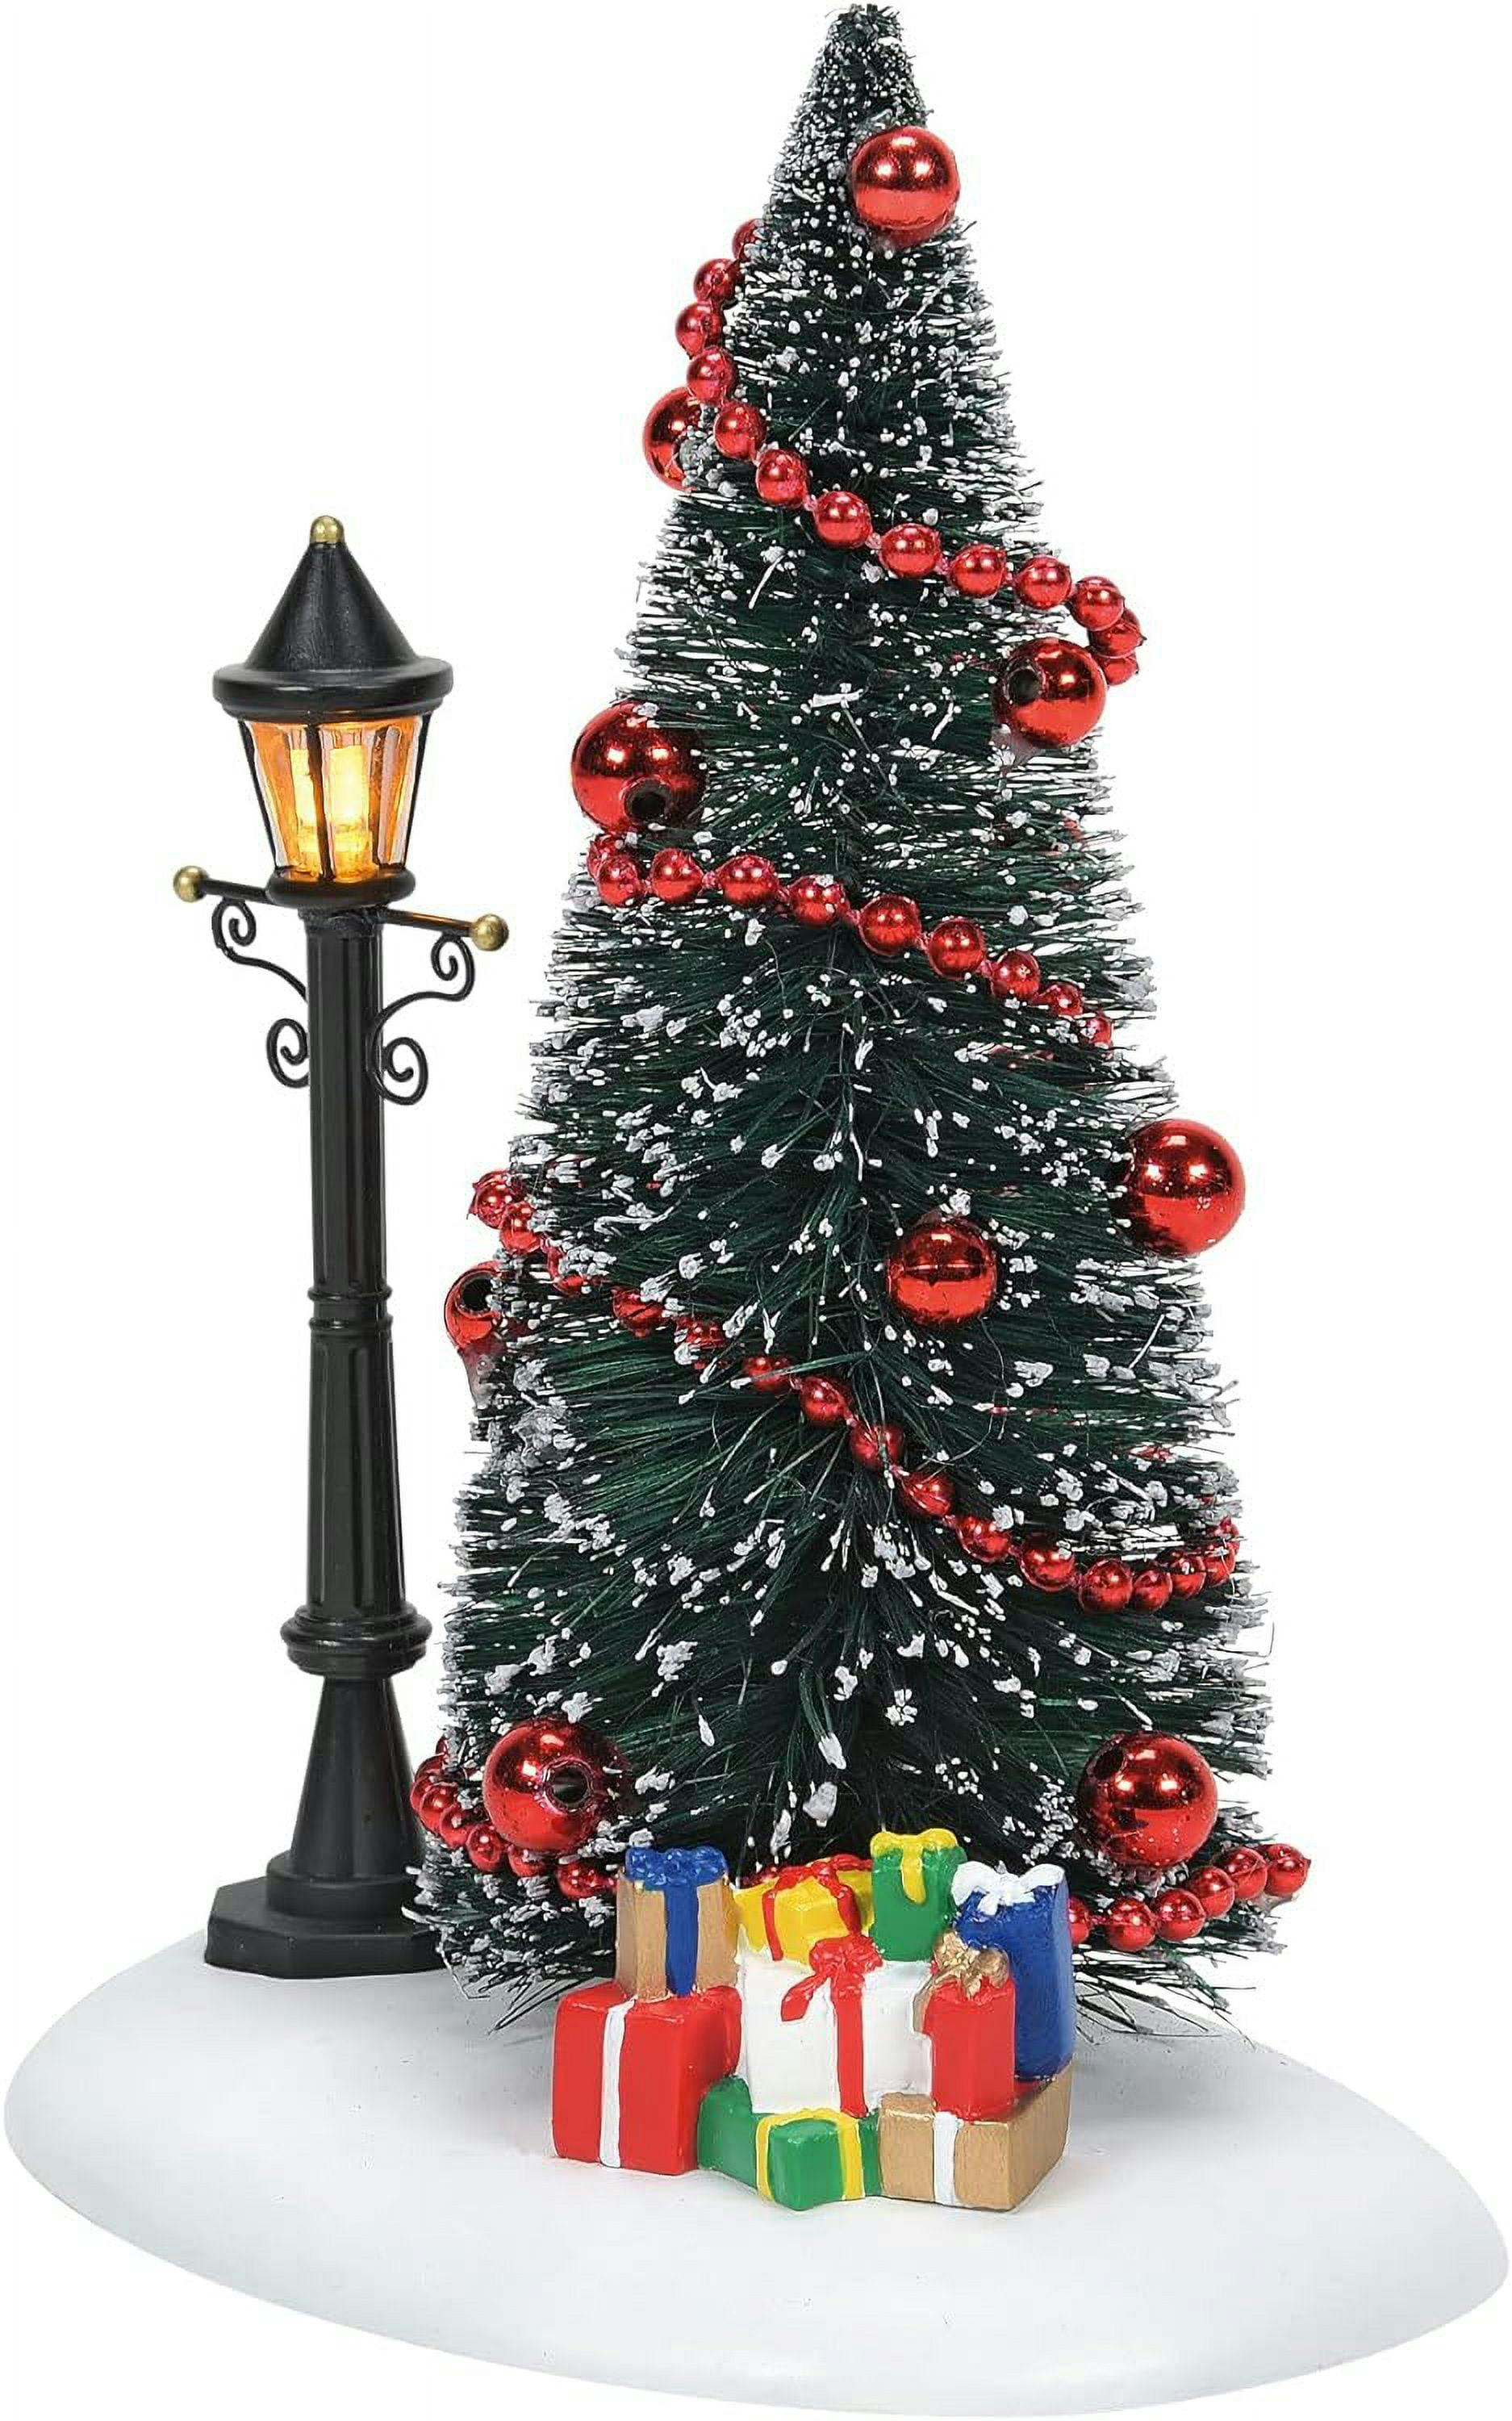 Santa's Holiday Glow Black Iron Streetlamp & Tree Figurine